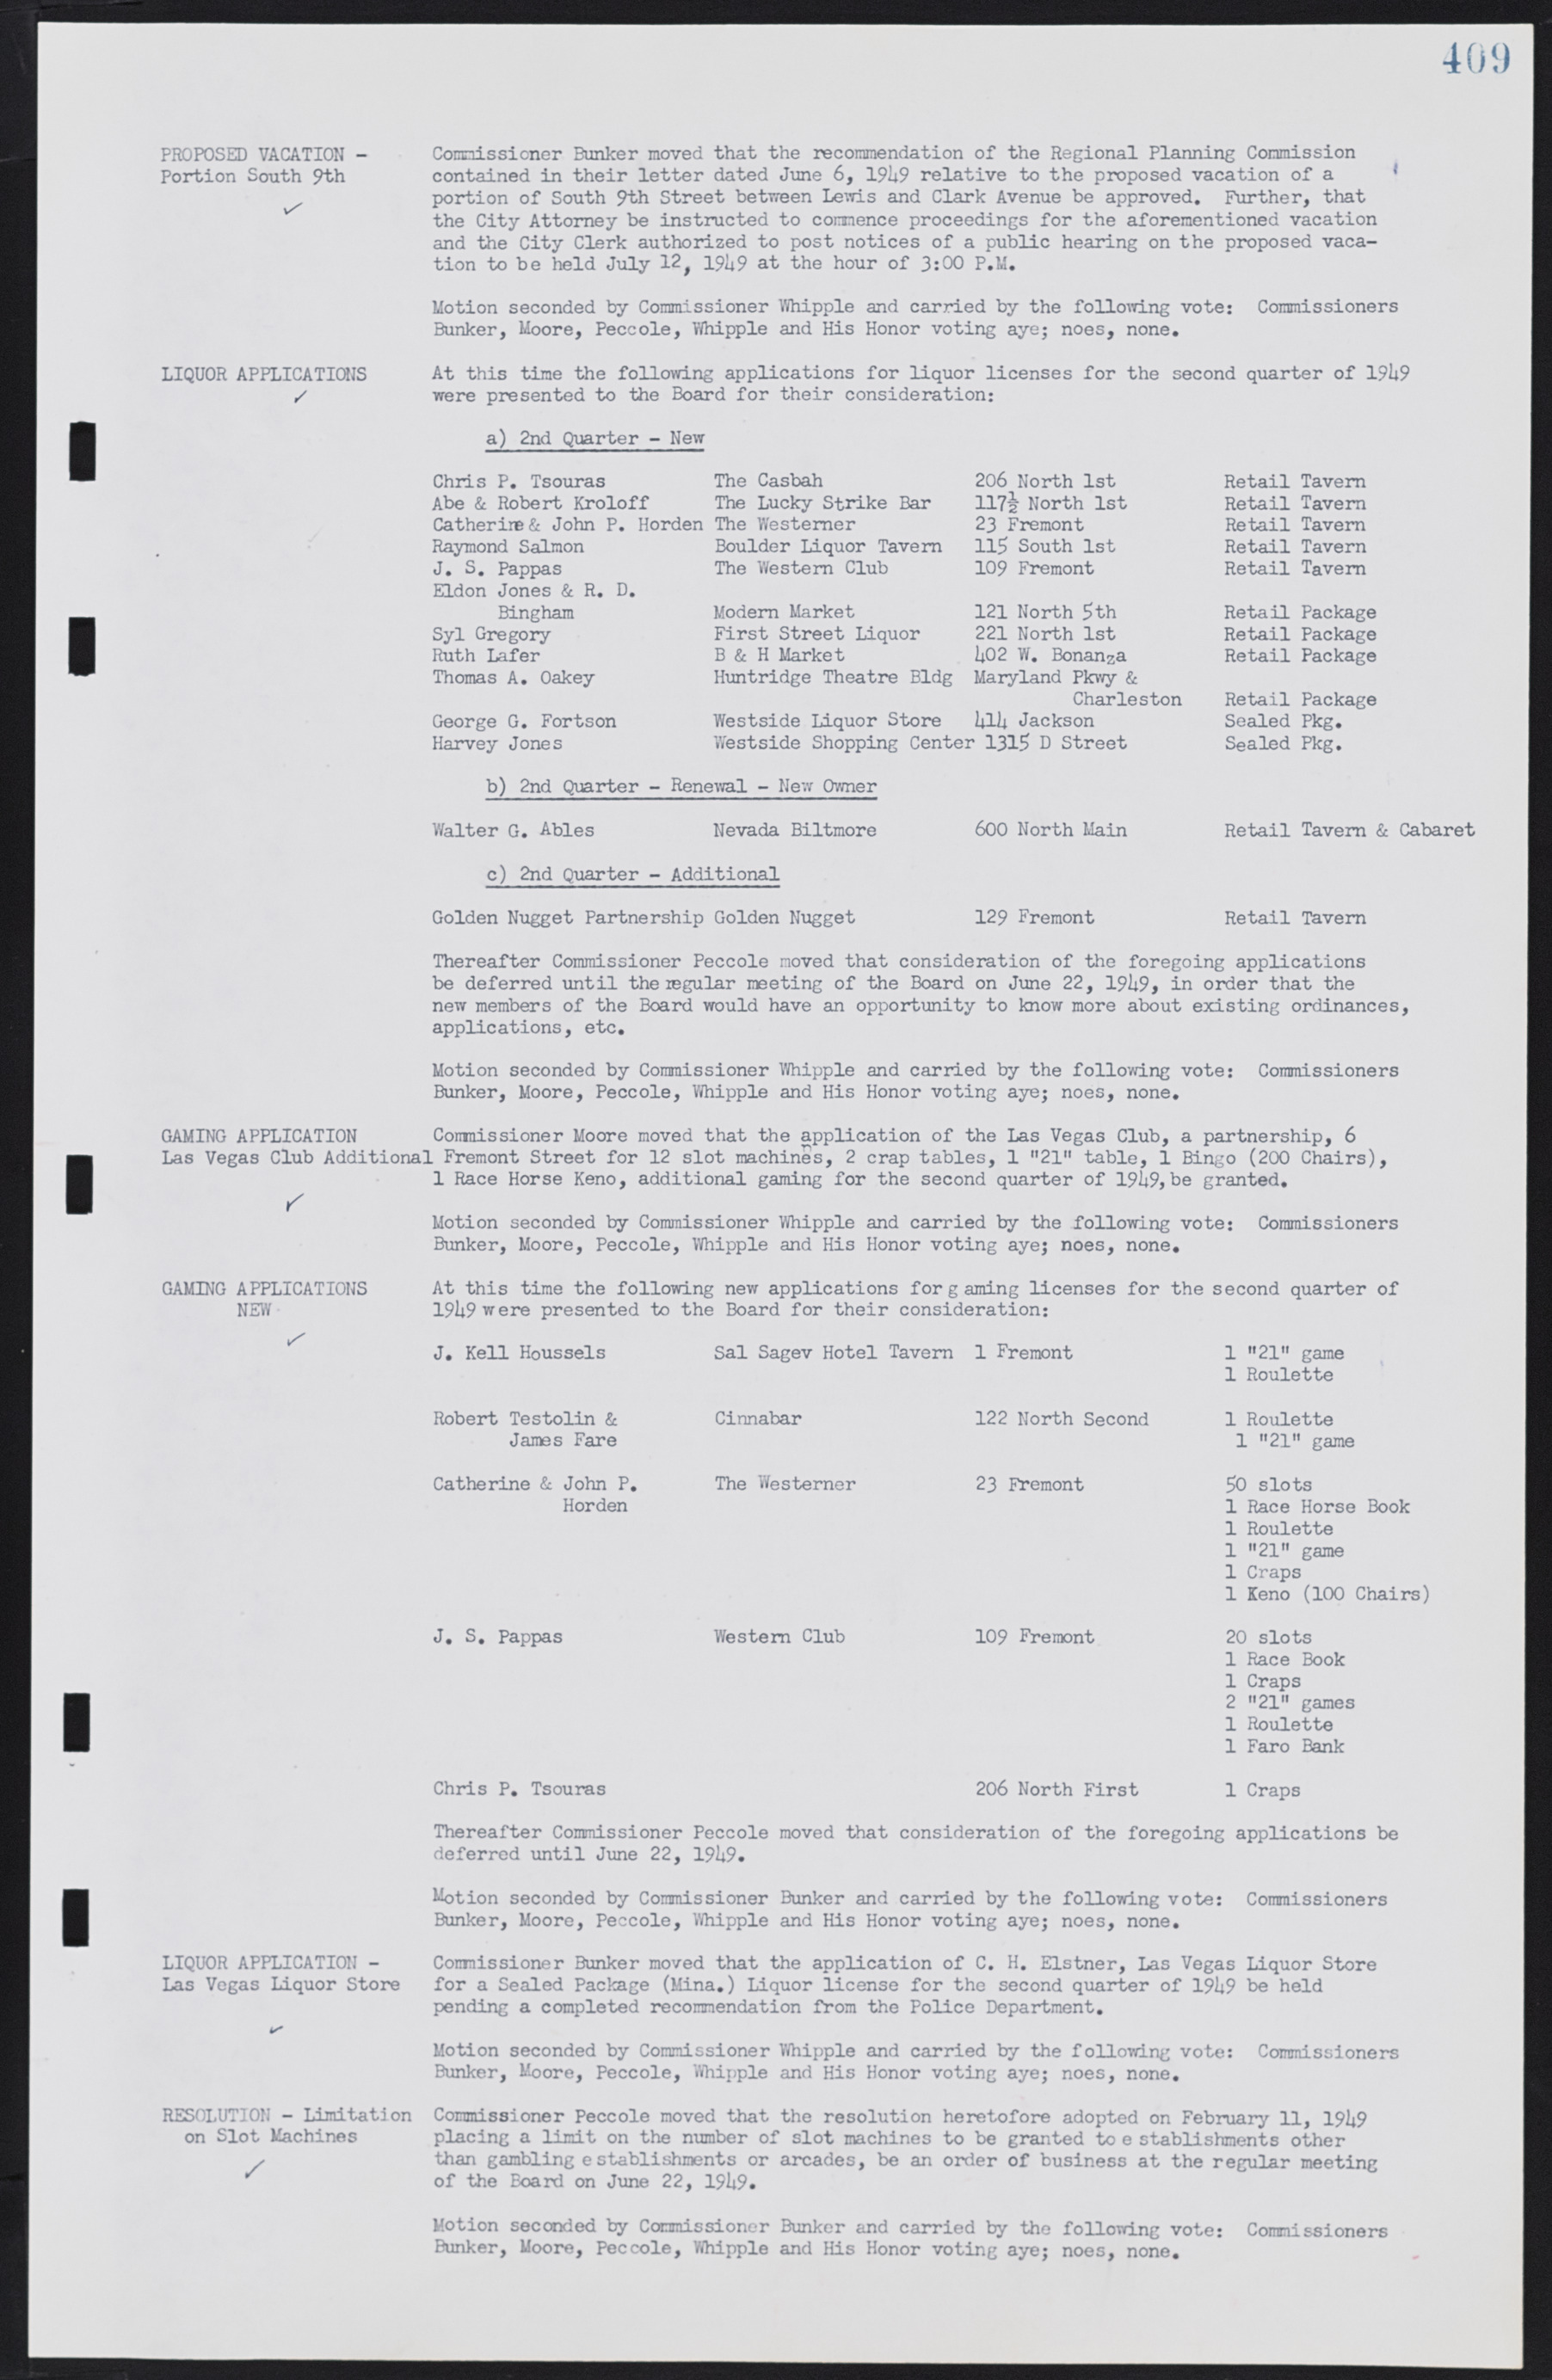 Las Vegas City Commission Minutes, January 7, 1947 to October 26, 1949, lvc000006-439